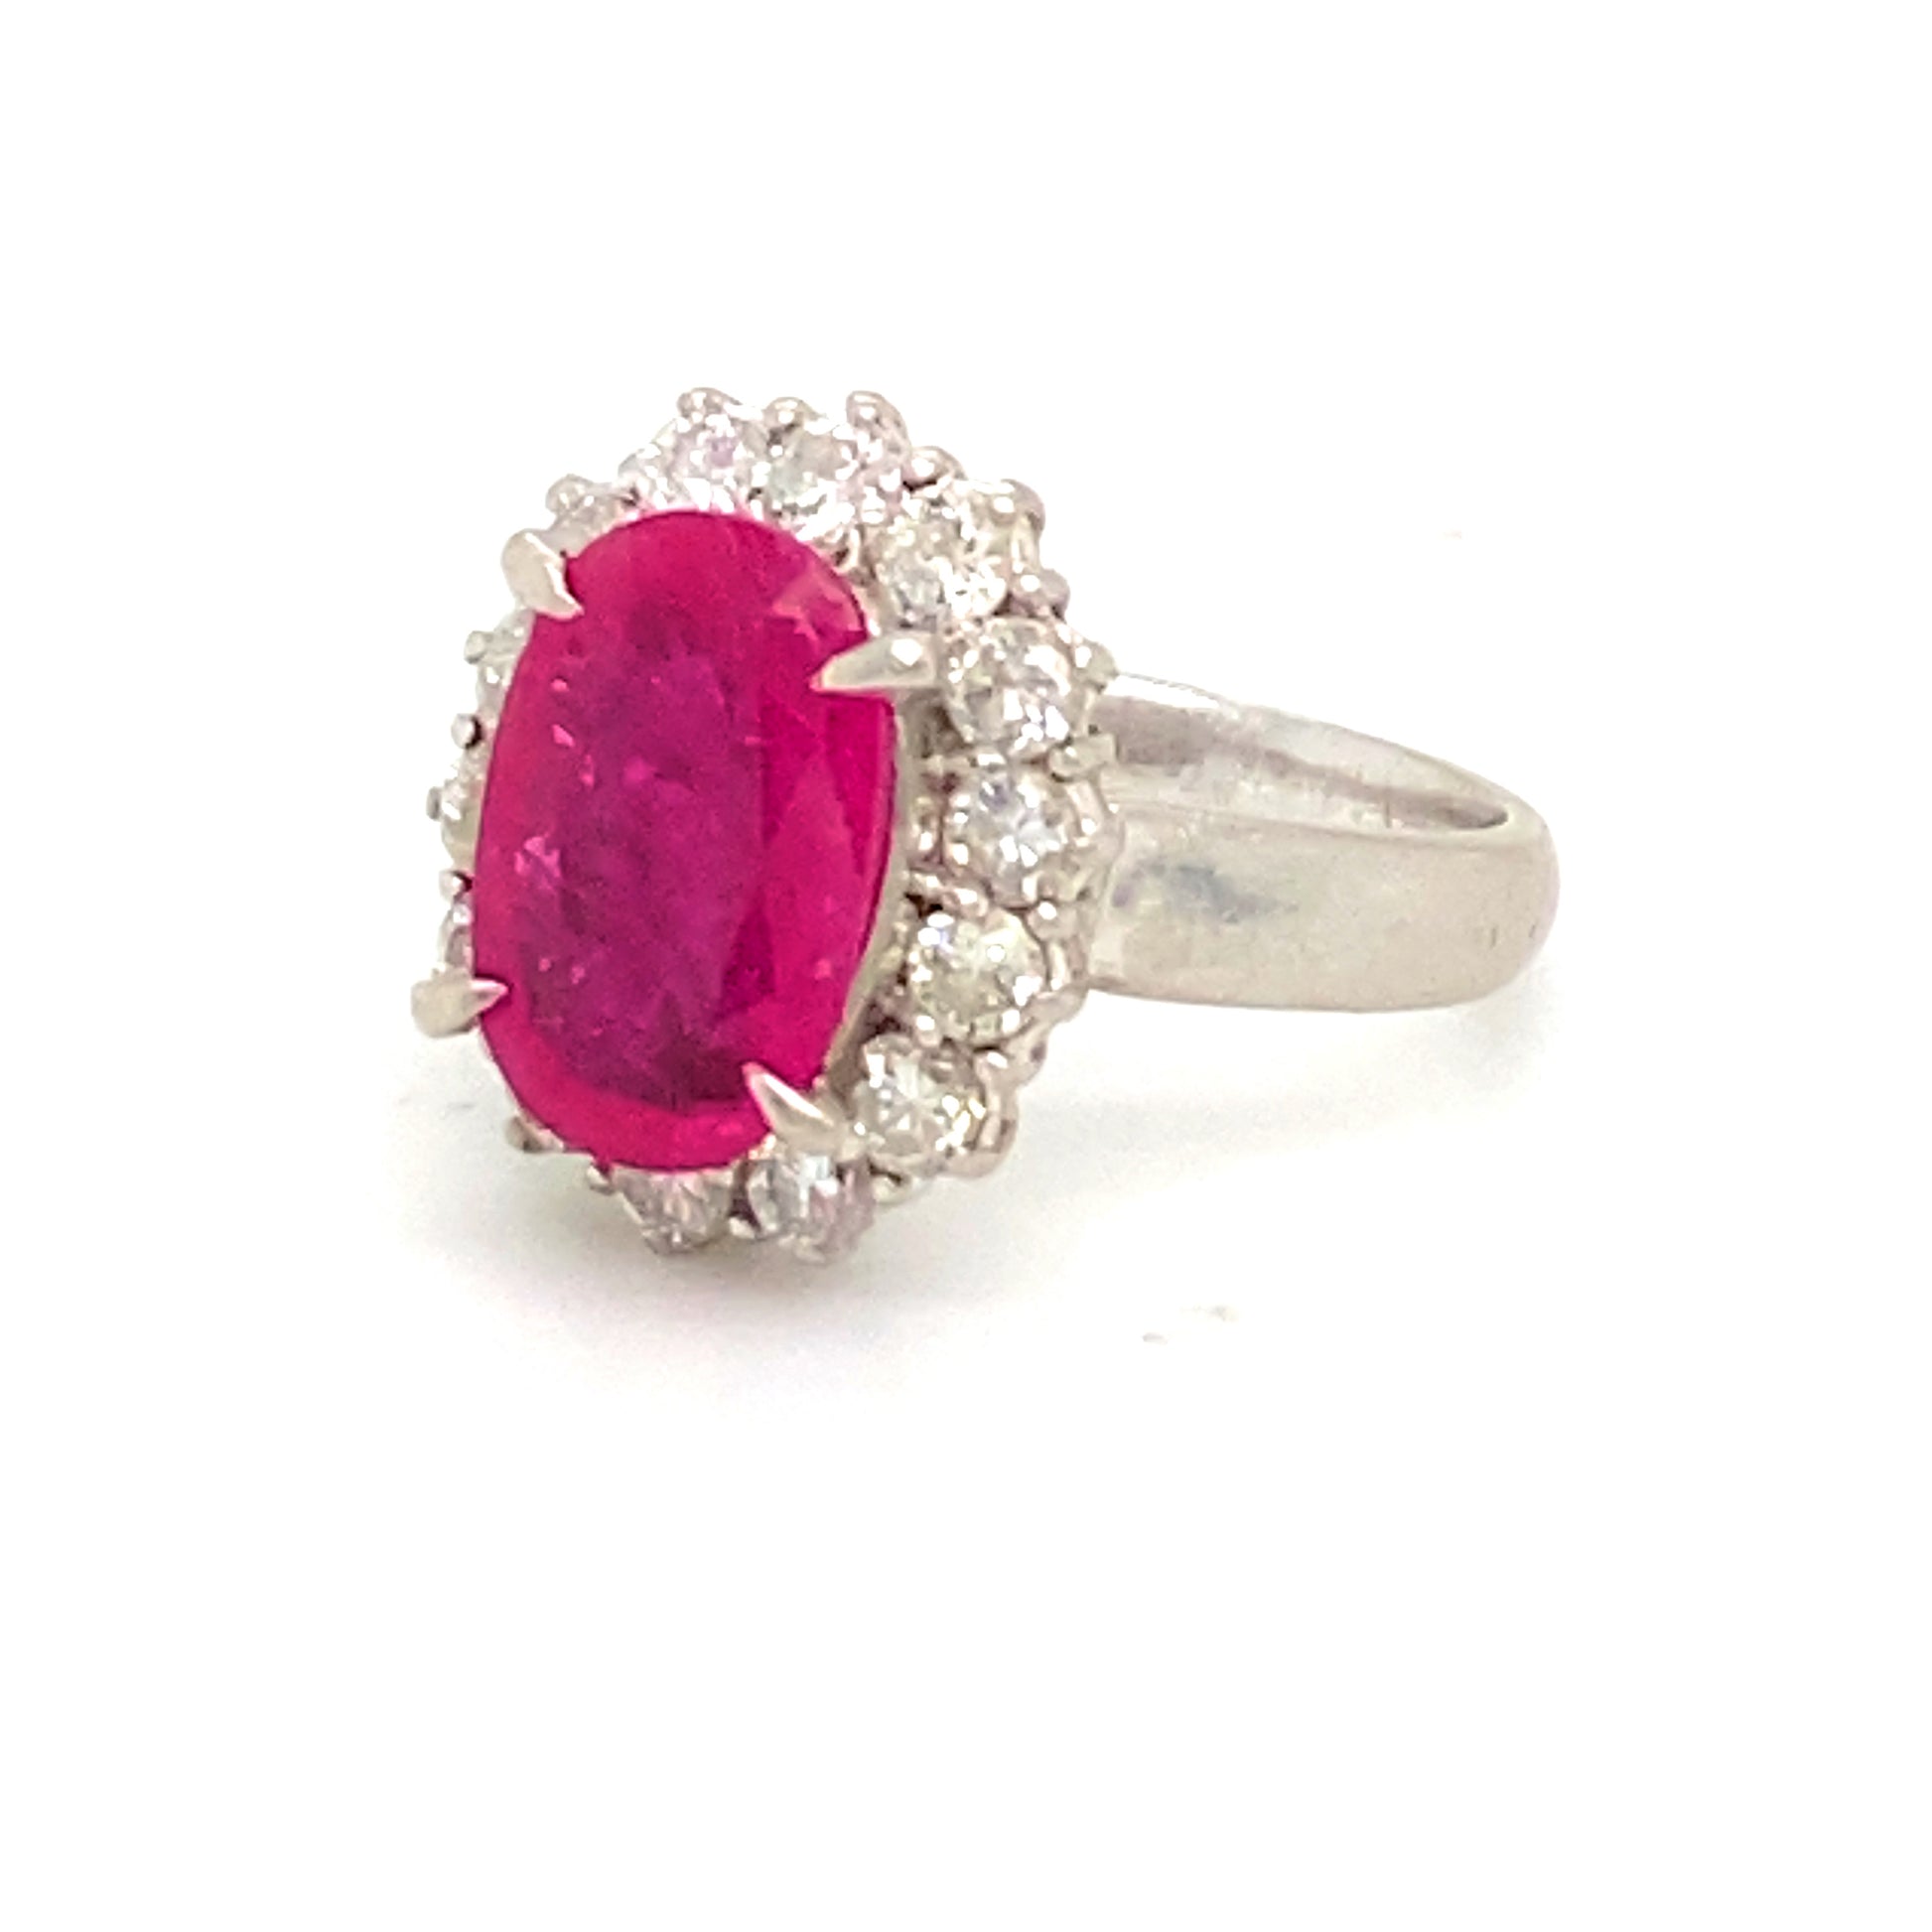 Burma Pink Ruby Ring with Diamonds